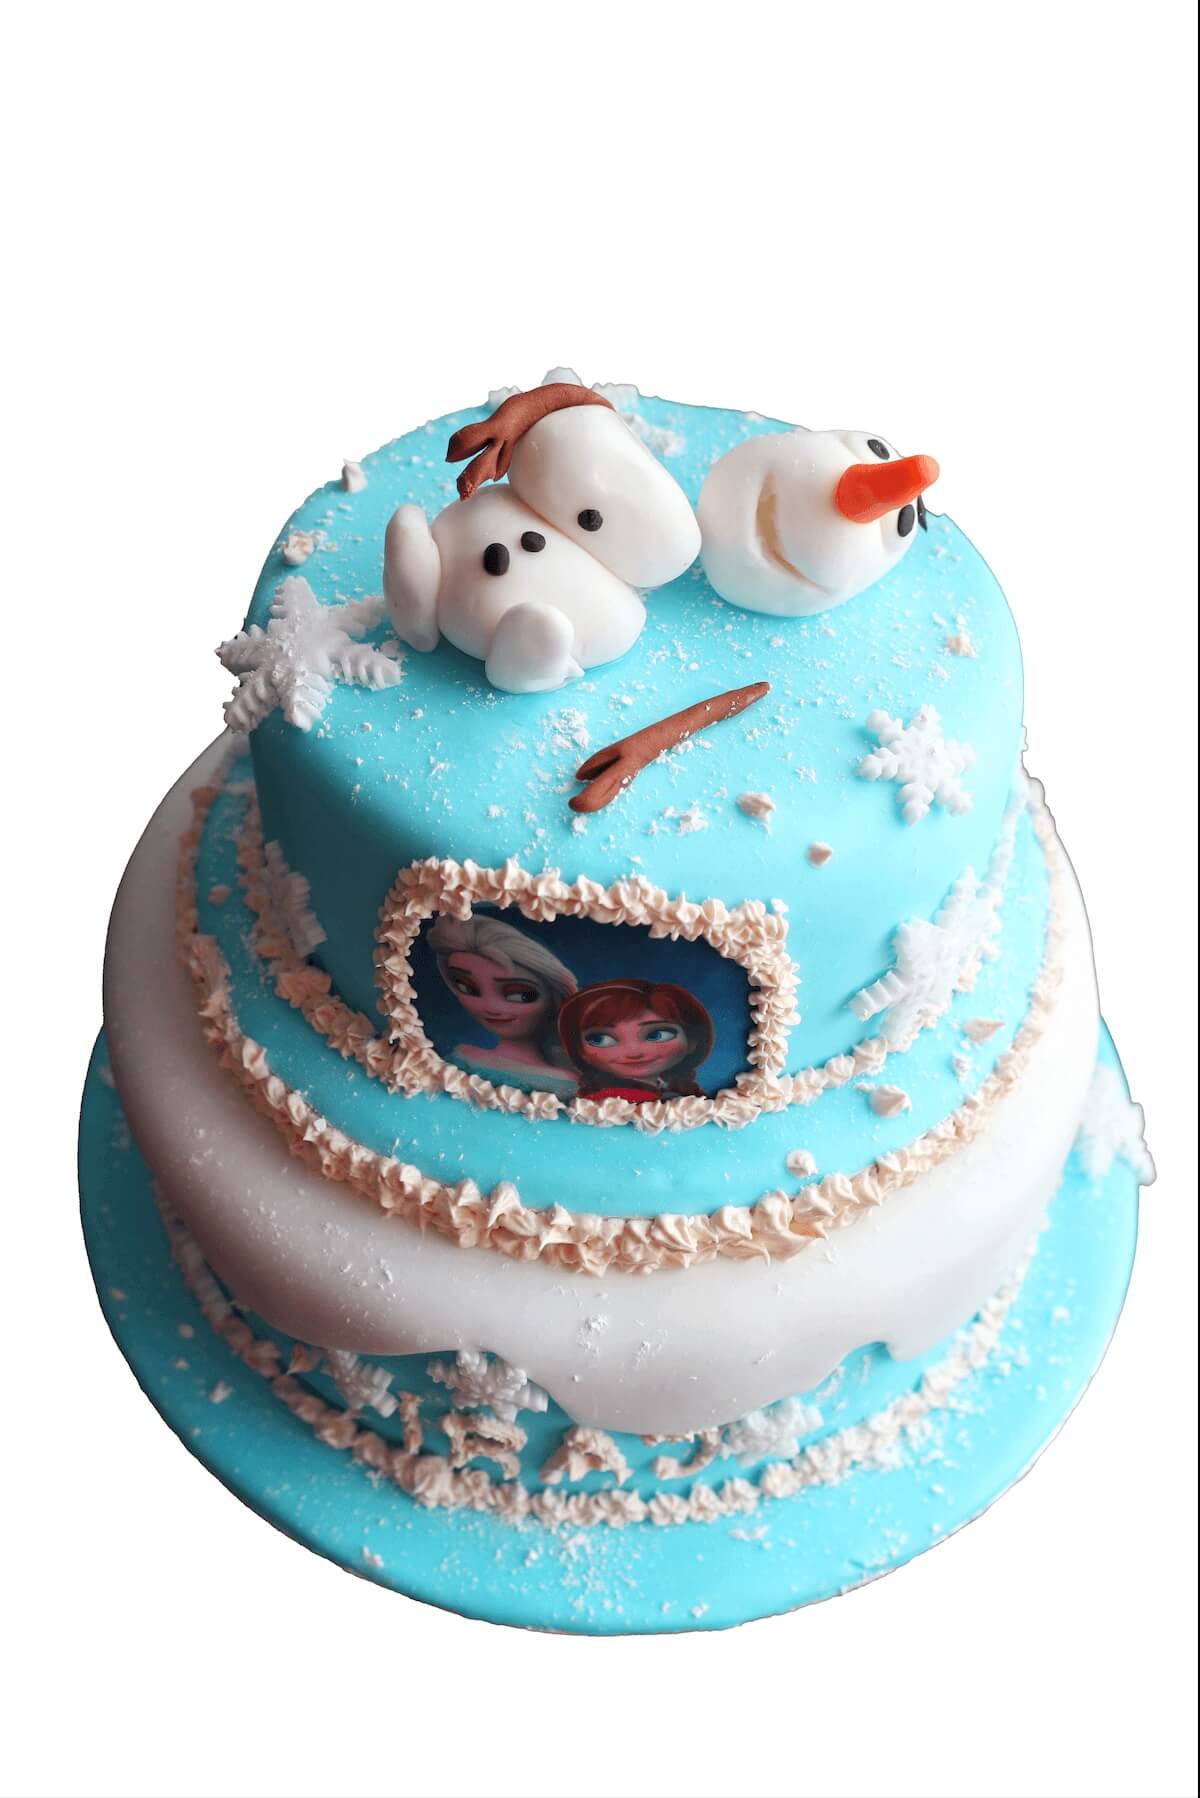 Disney Frozen Cake Recipe is a Perfect Frozen Themed Idea - Easy Family  Recipe Ideas